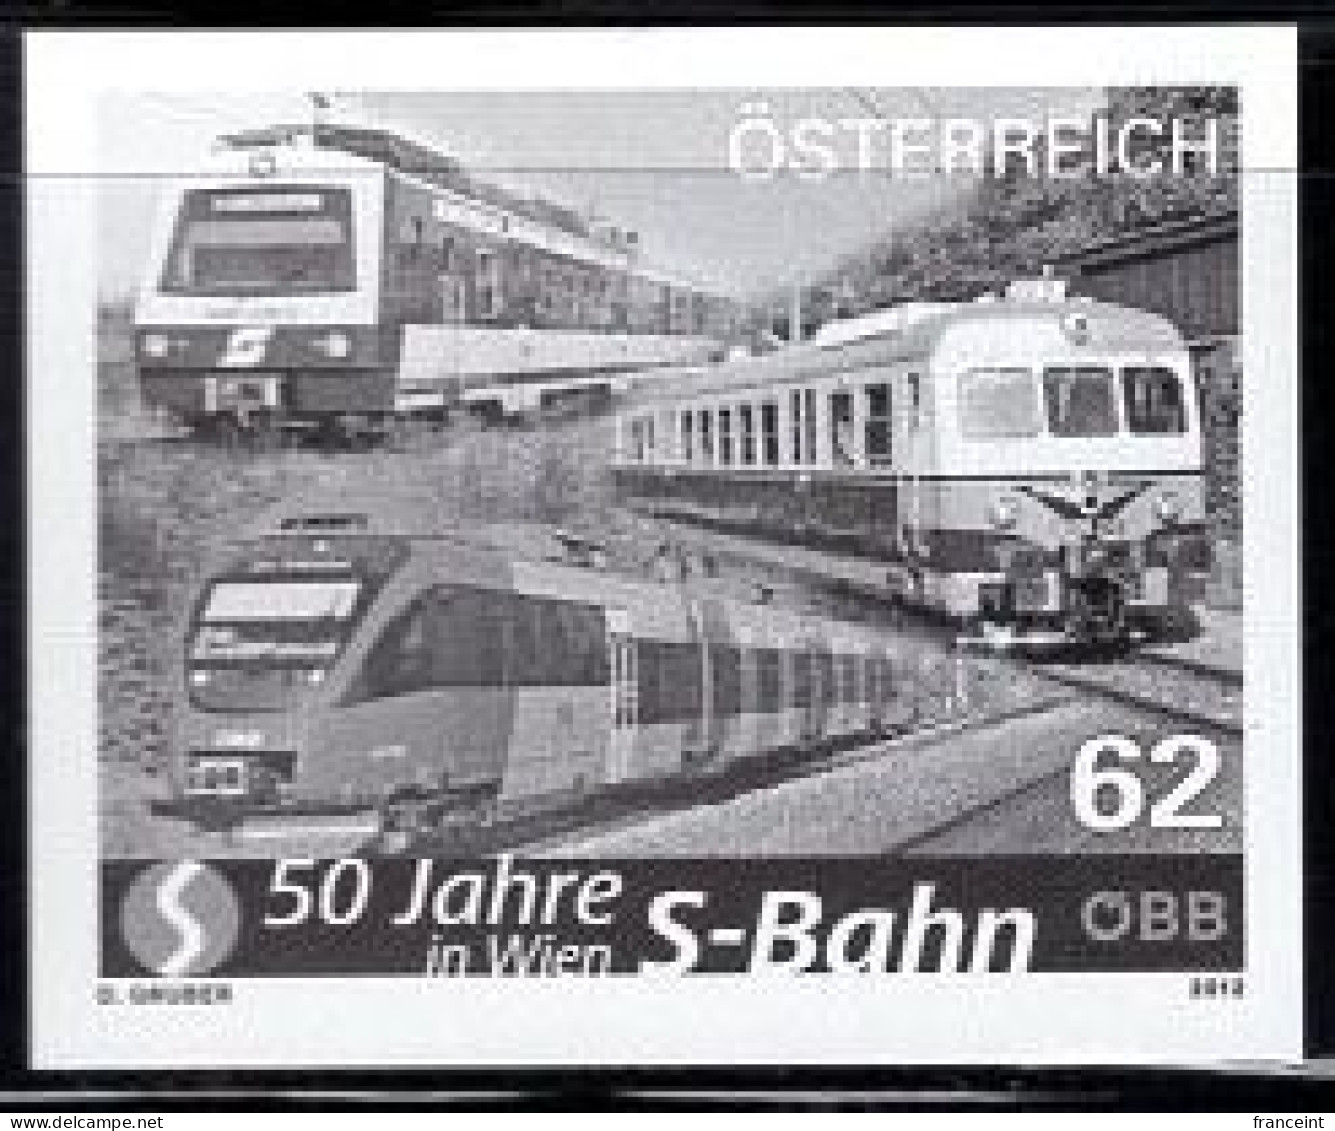 AUSTRIA(2012) S-Bahn Trains. Black Print. 50th Anniversary Of Rapid Transit. - Proeven & Herdruk